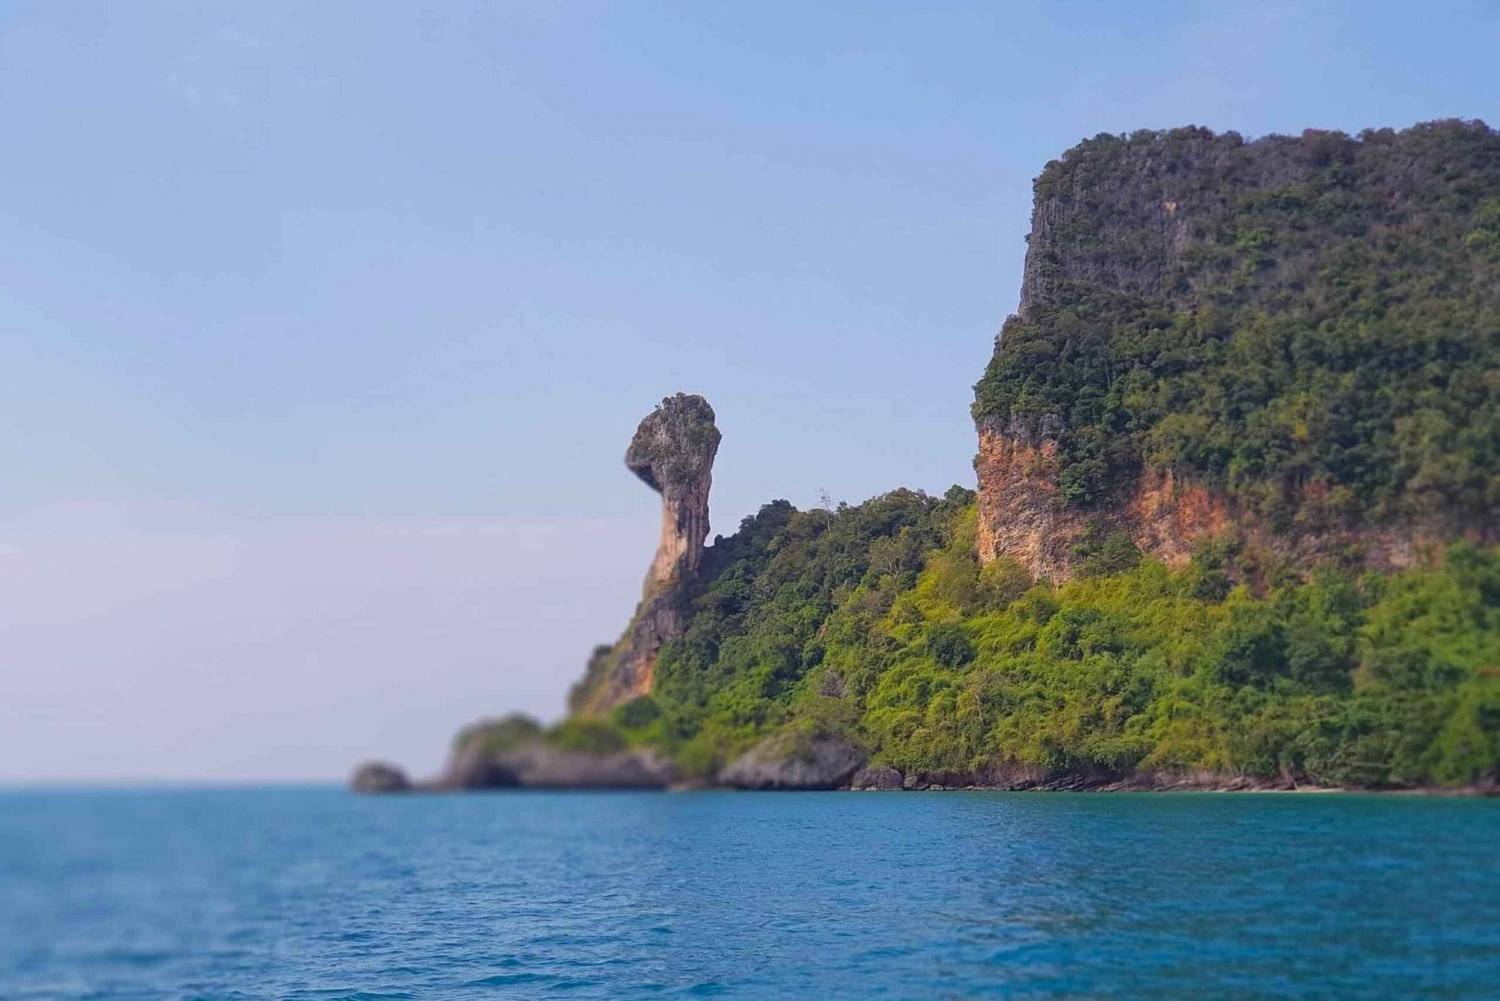 Krabi: 4 Islands Day Trip by Speedboat Including Lunch Box